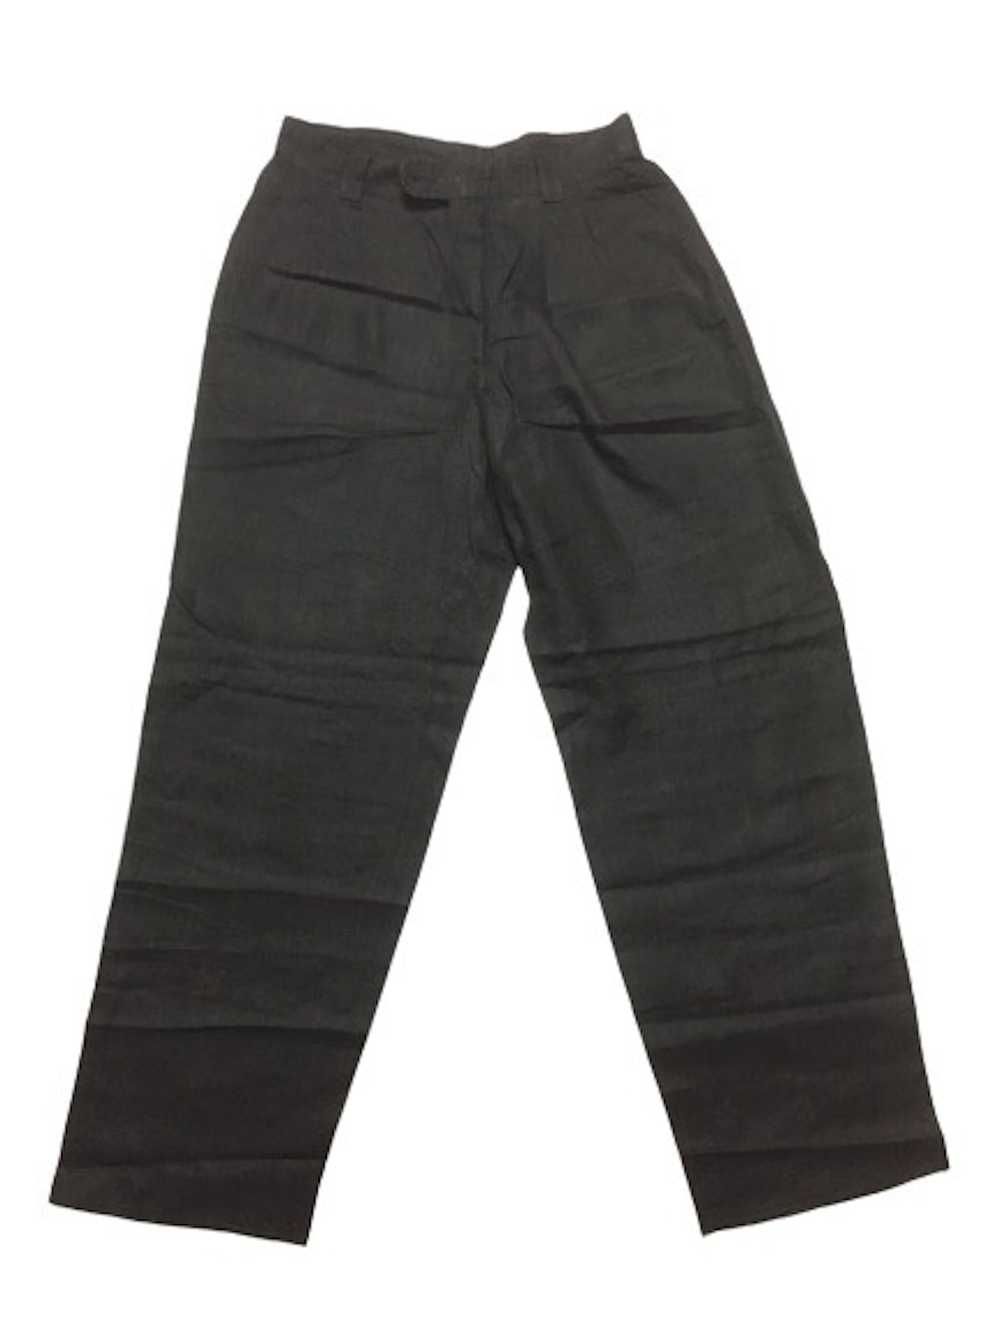 Versace Versace v2 linen slack pants waist 29 - image 2